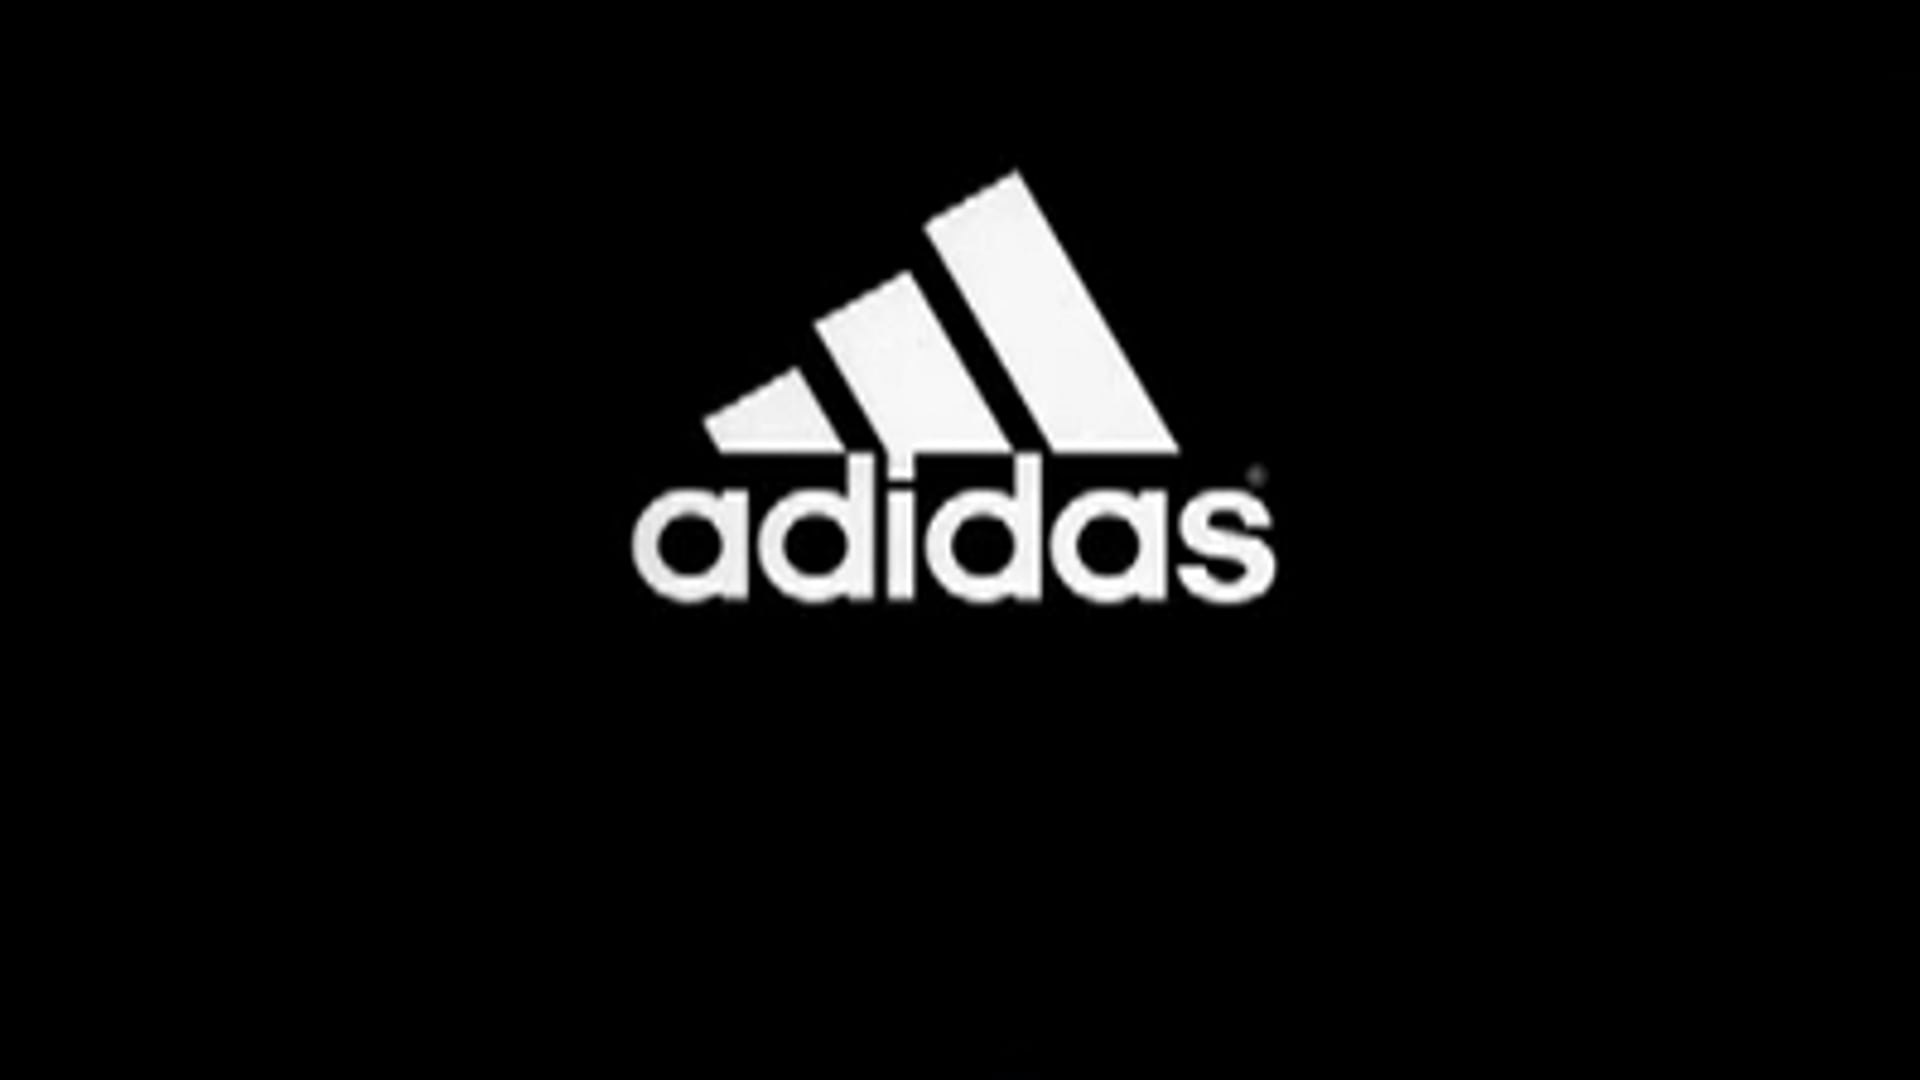 Adidas / Jake Scott